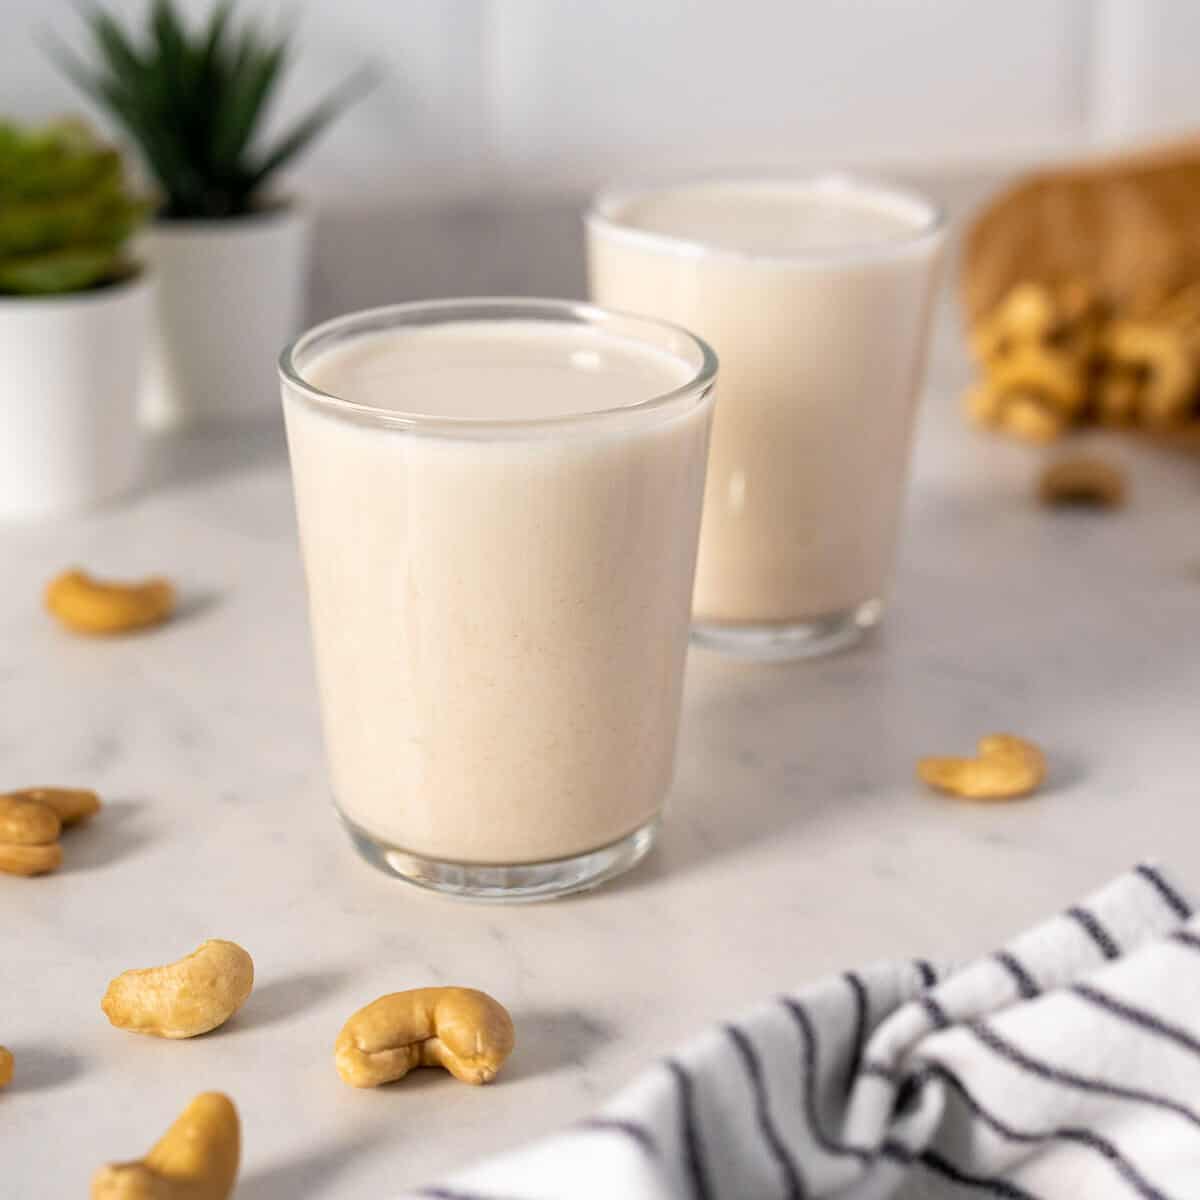 https://ourplantbasedworld.com/wp-content/uploads/2023/04/how-to-make-homemade-cashew-milk-easy-healthy-vegan-7400007.jpg